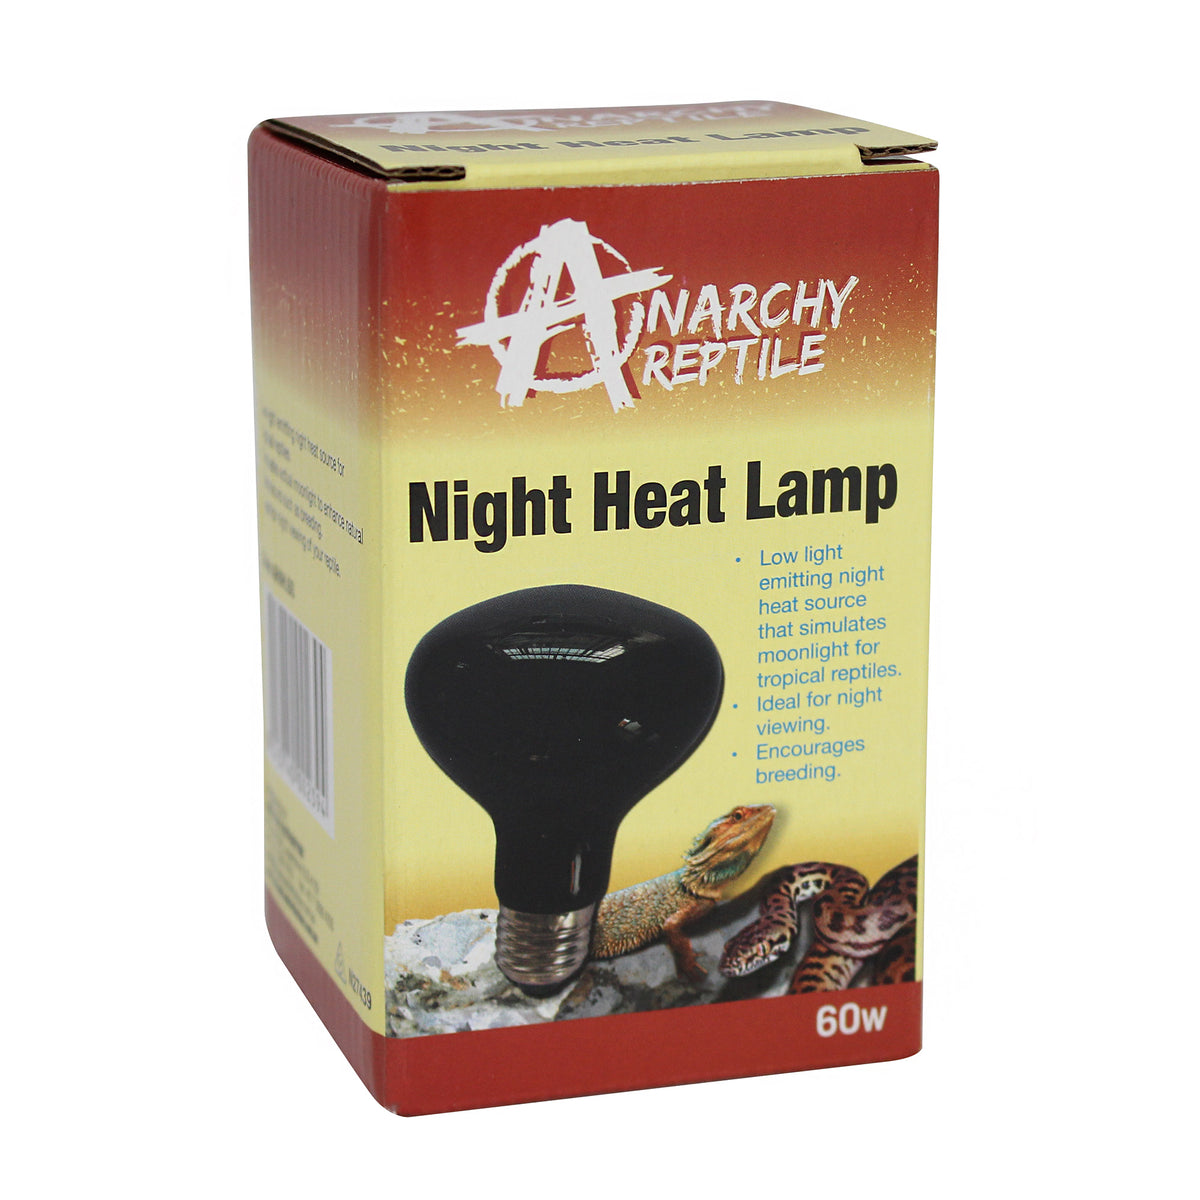 Anarchy Reptile Night Heat Lamp